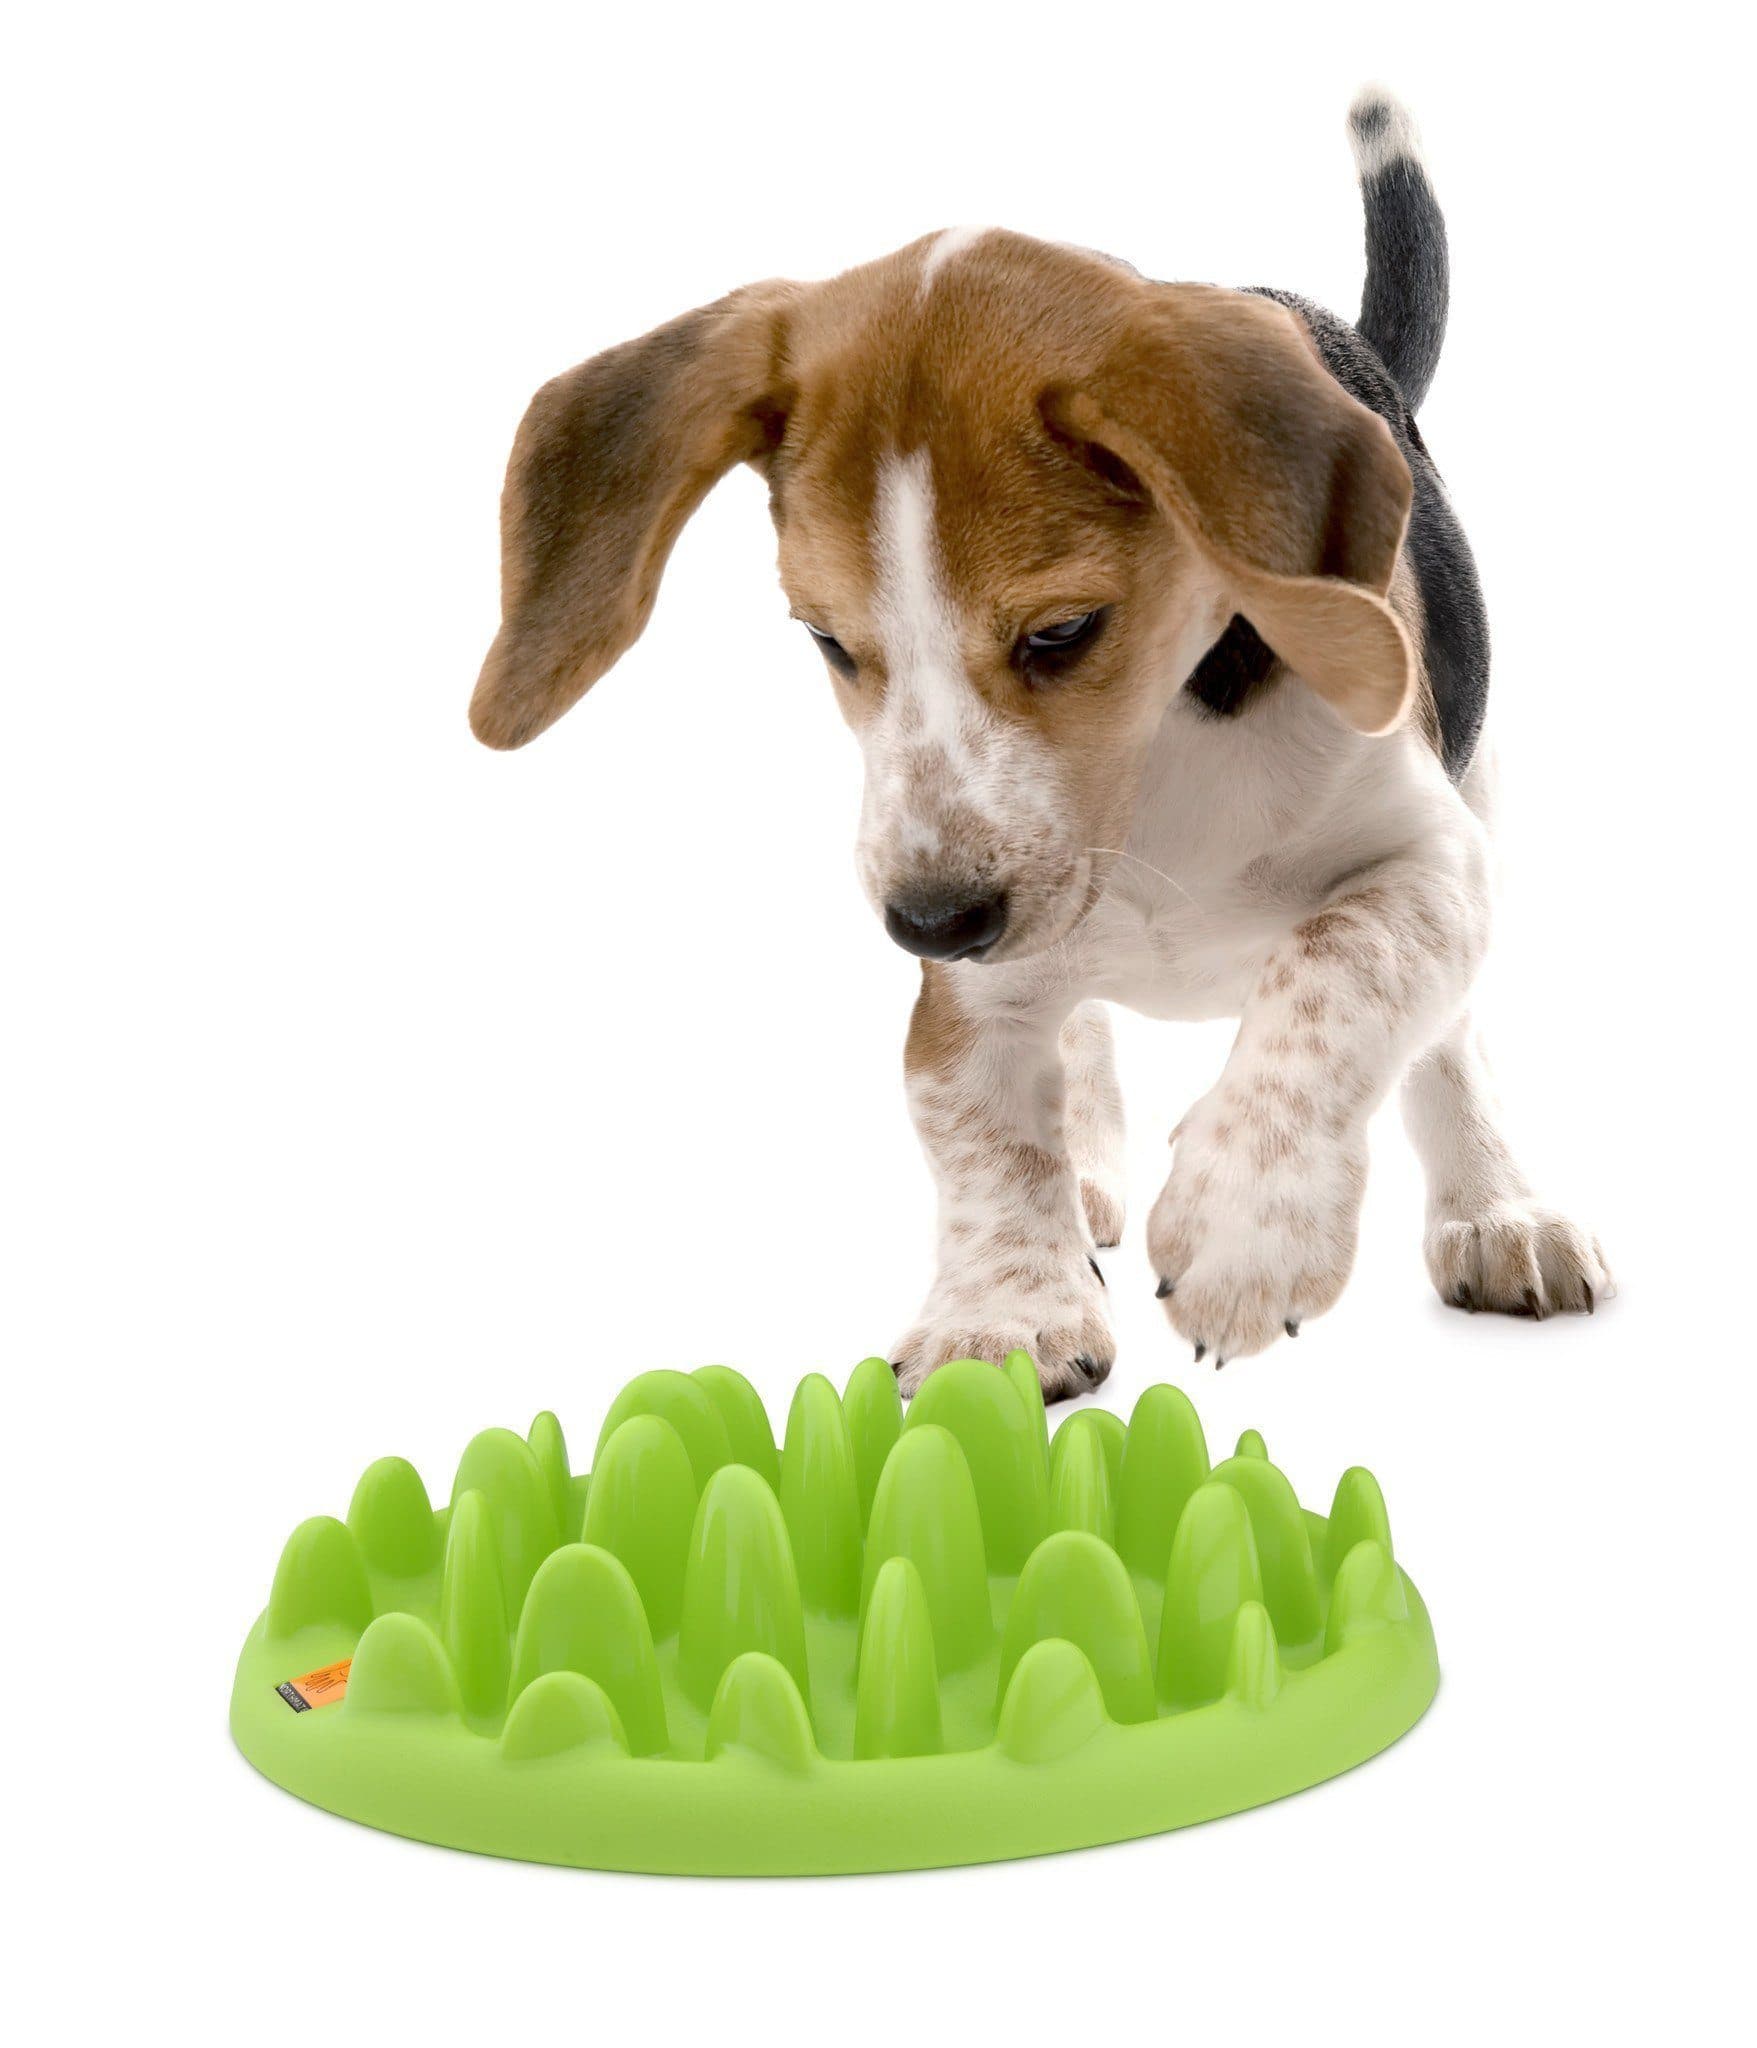 Mini Plato Green Feeder para comer despacio-Perros Chicos o Cachorros